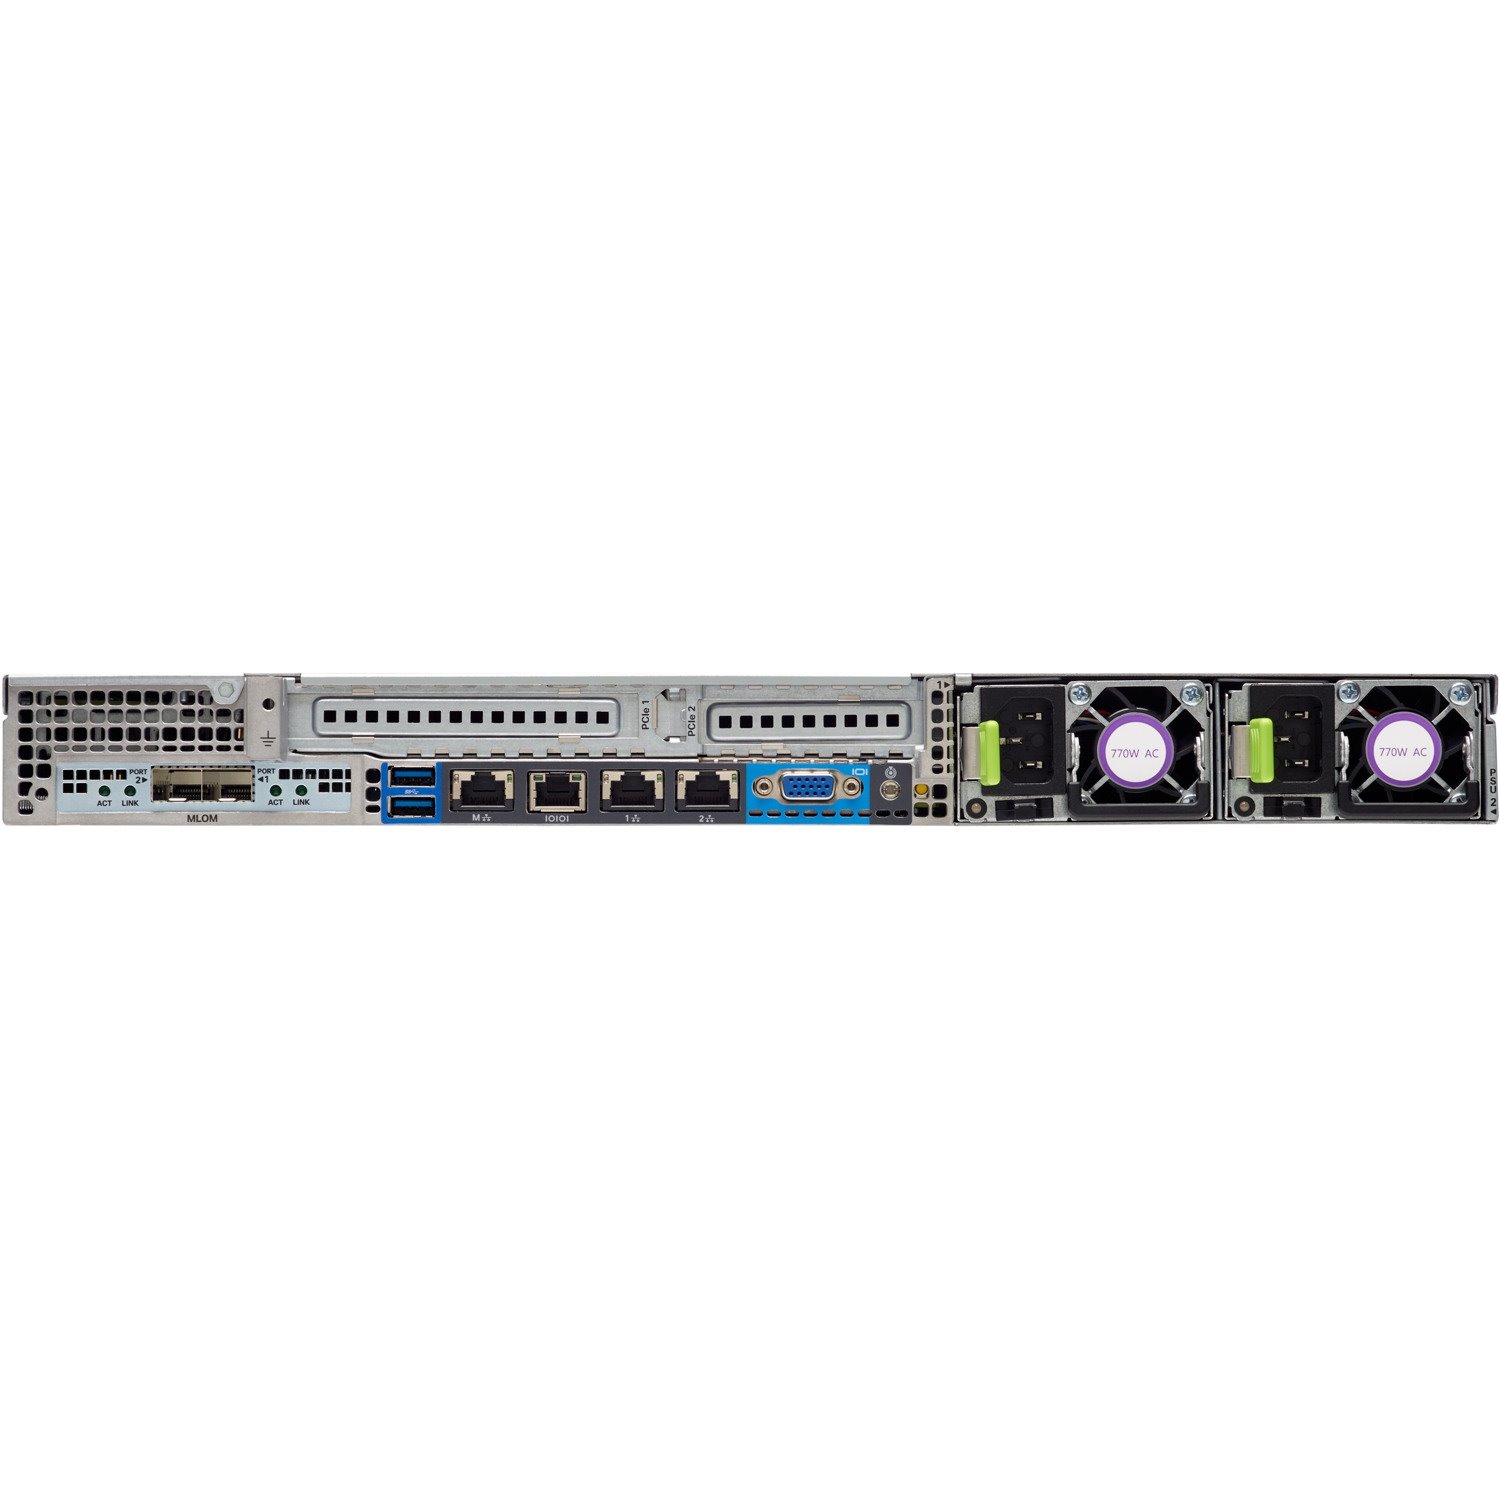 Cisco HyperFlex HX220c M4 1U Rack Server - 2 x Intel Xeon E5-2660 v3 2.60 GHz - 384 GB RAM - 12Gb/s SAS Controller